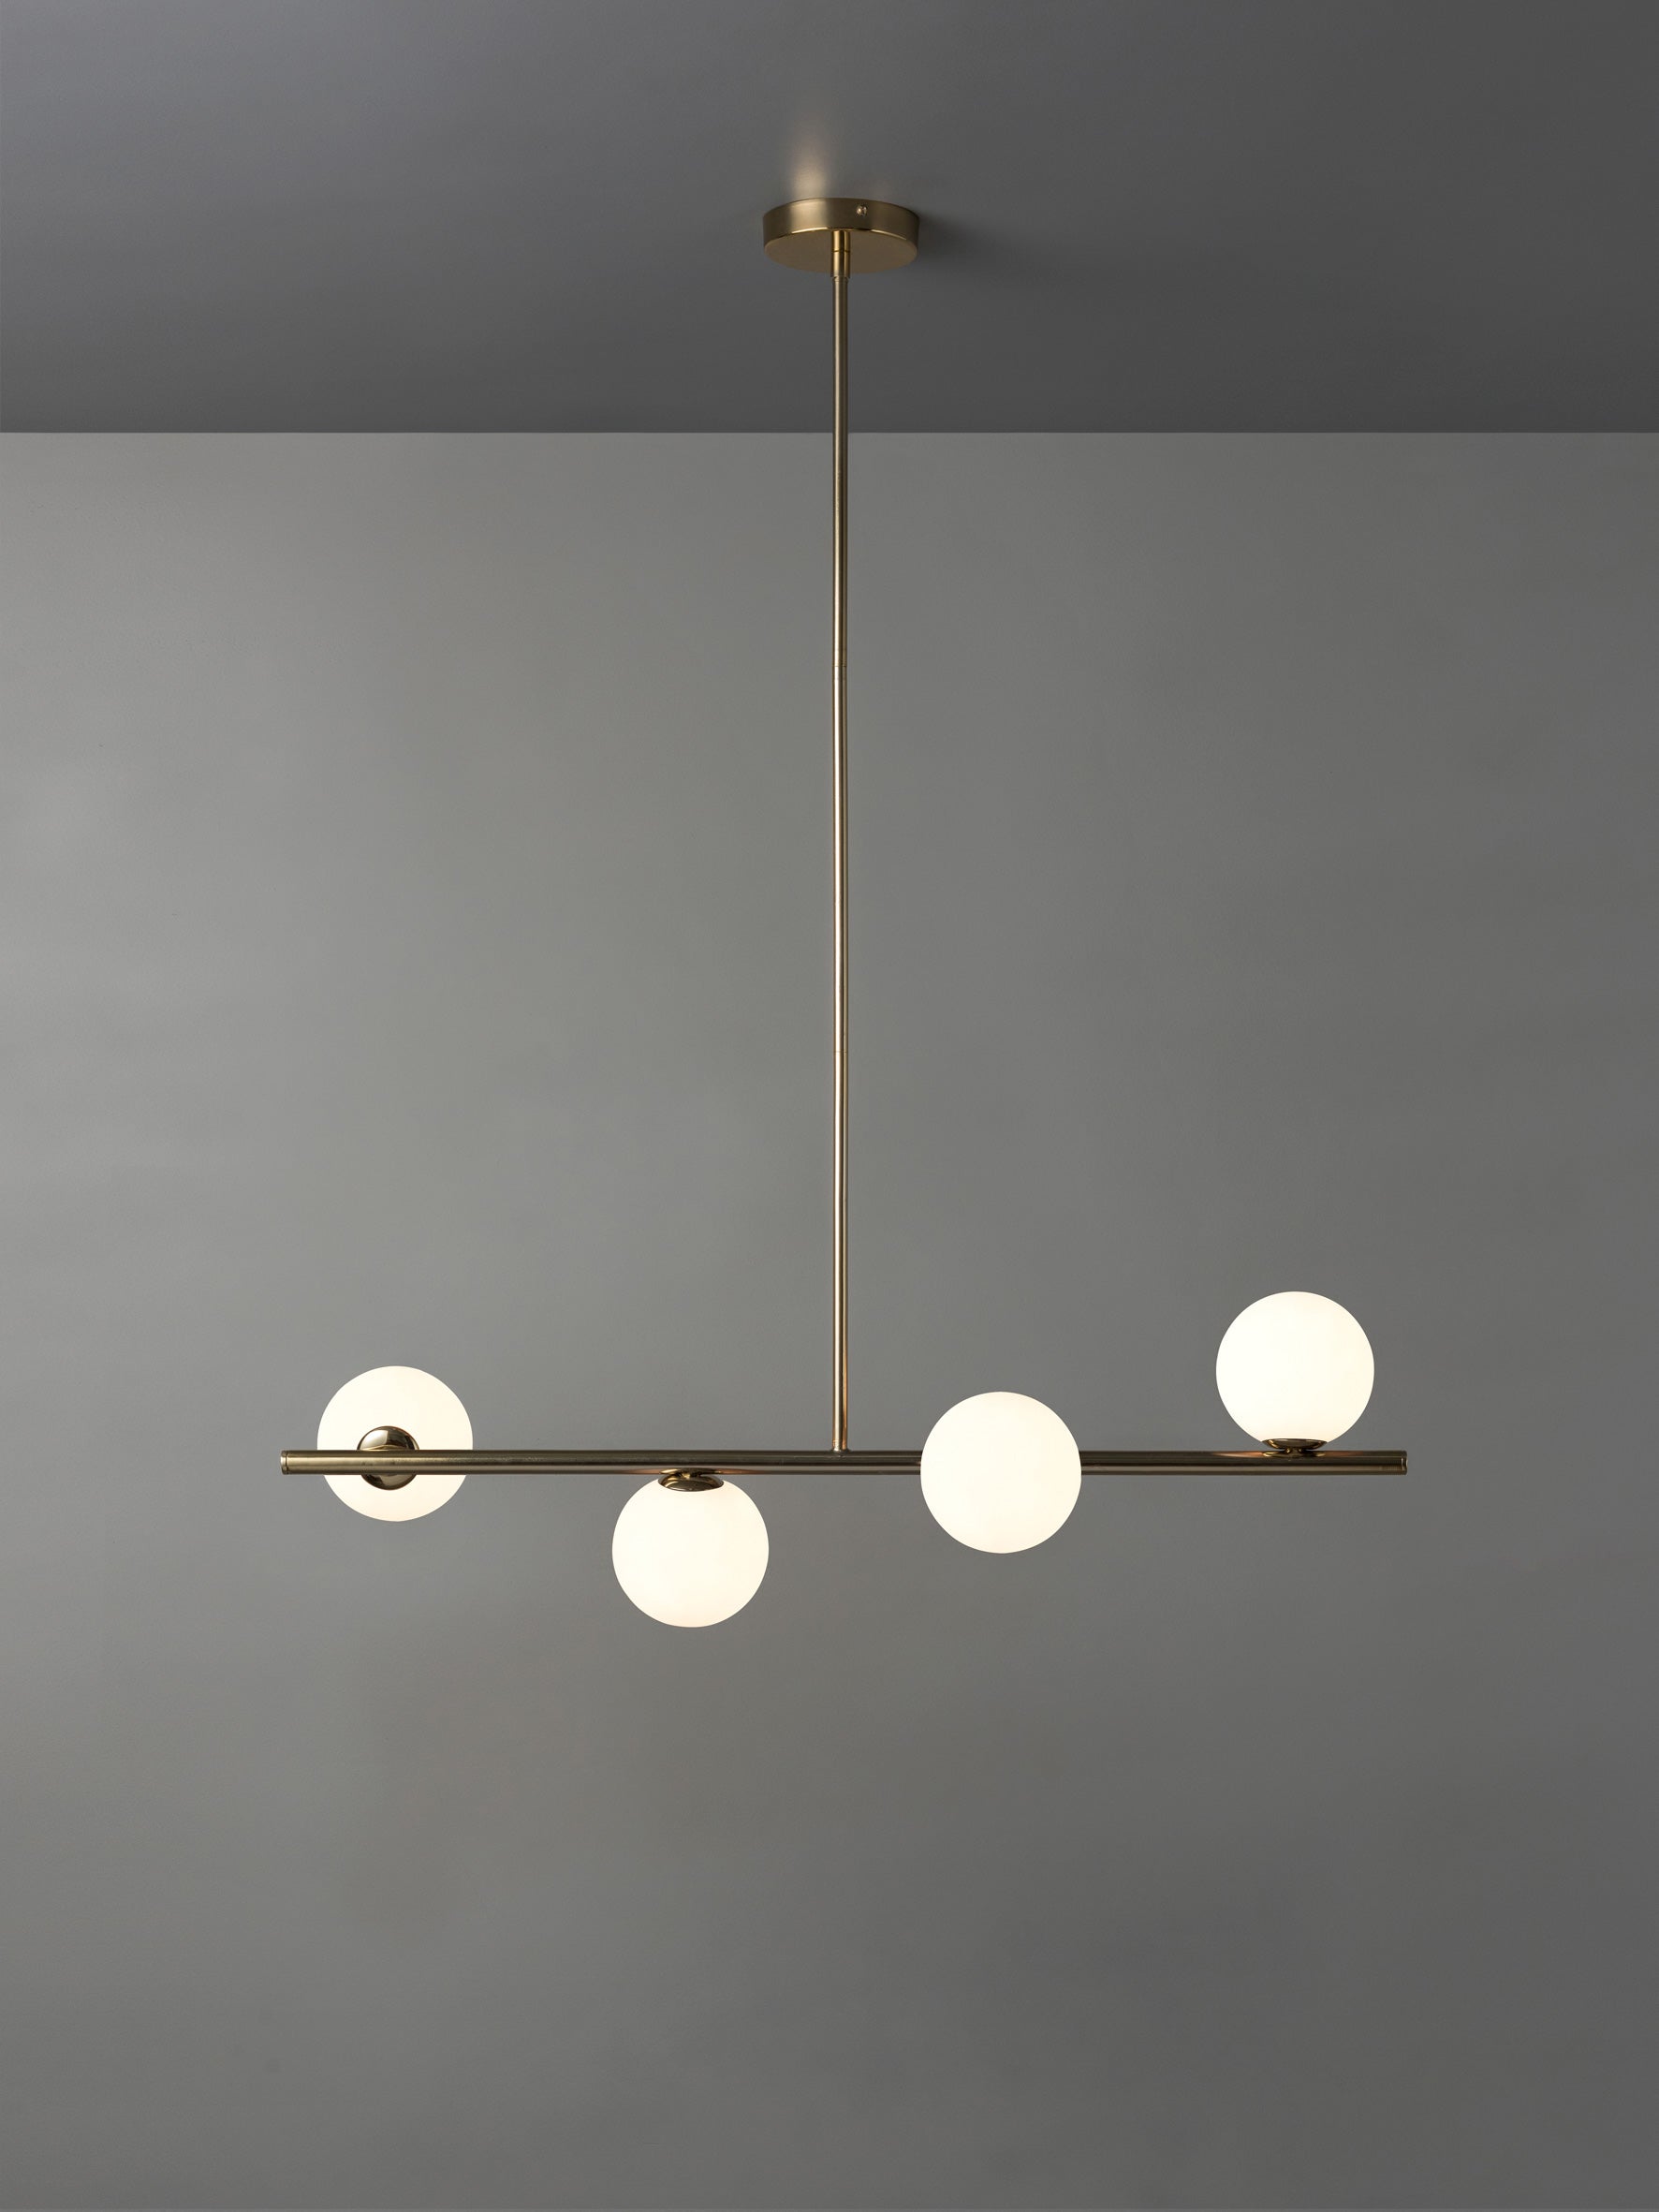 Perch - 4 light brass and opal pendant bar | Ceiling Light | Lights & Lamps Inc | Modern Affordable Designer Lighting | USA